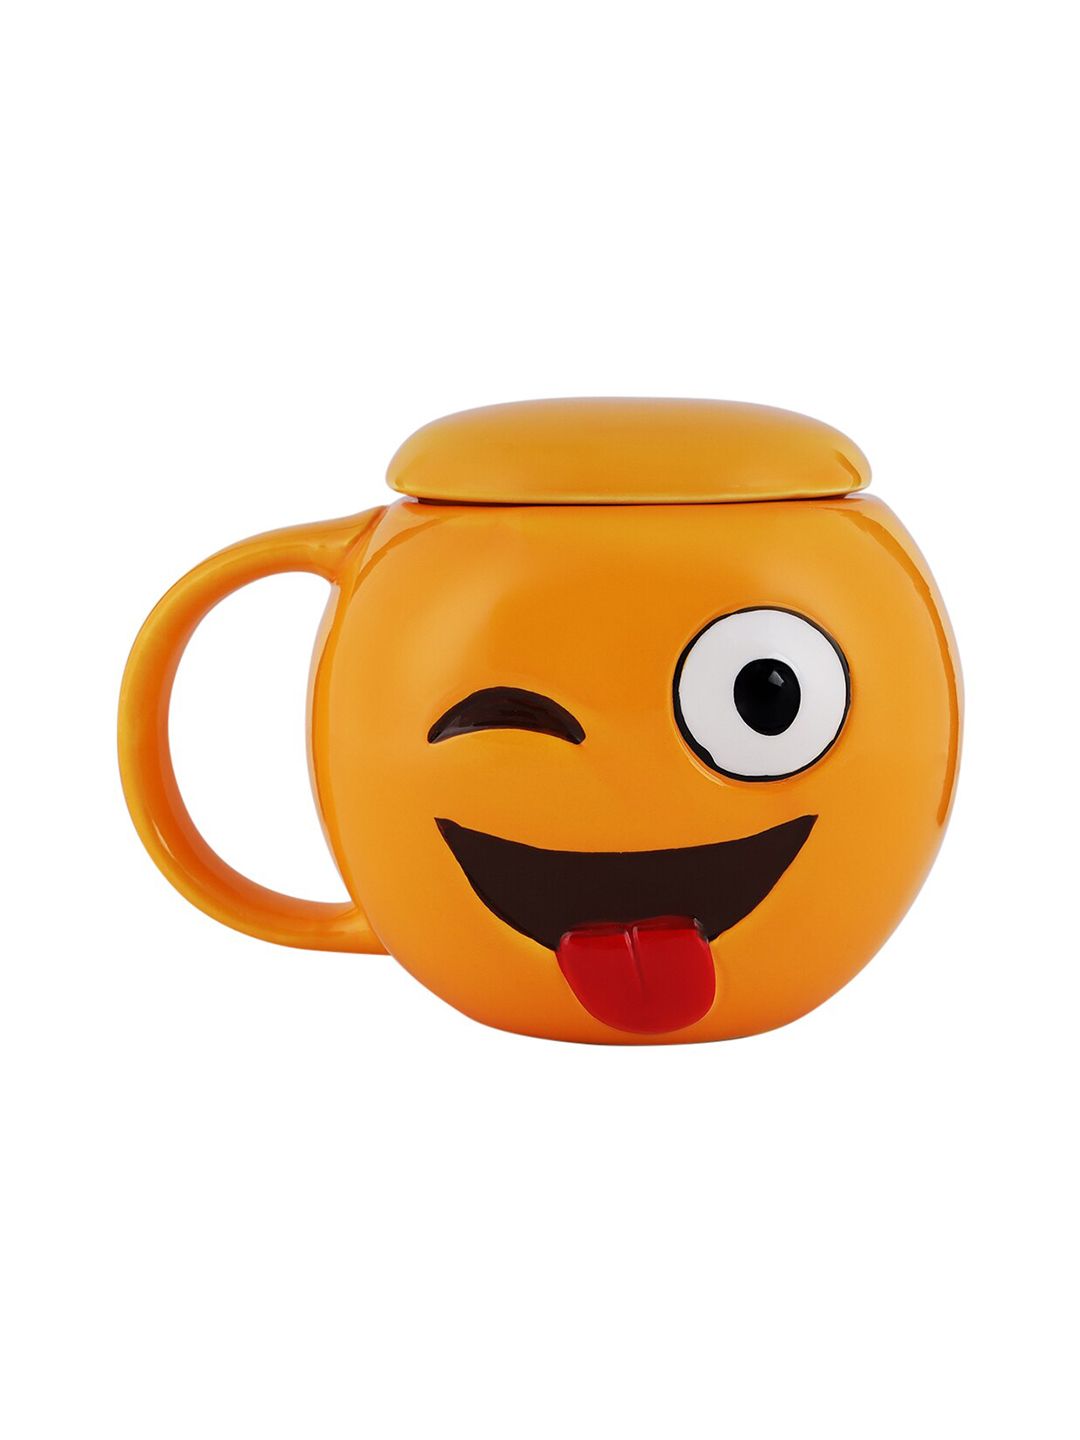 BonZeaL Yellow & Red Hand Painted Ceramic Wink Eye Emoji Coffee Mug Price in India